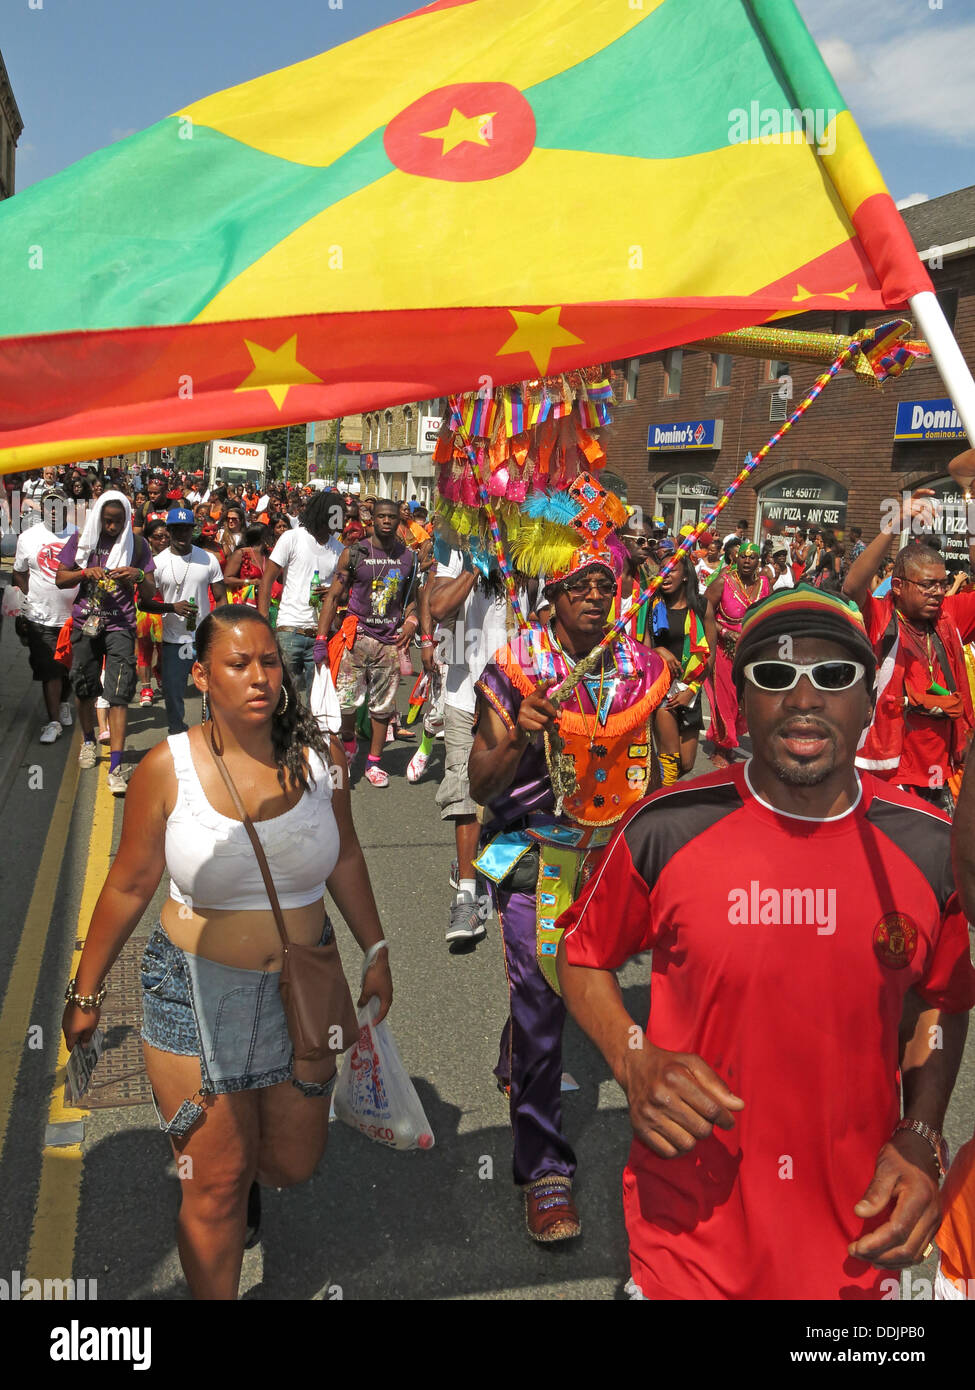 Kostümierte Tänzer mit Fahne aus Huddersfield Karneval 2013 Afrika Karibik Parade Straßenfest Stockfoto